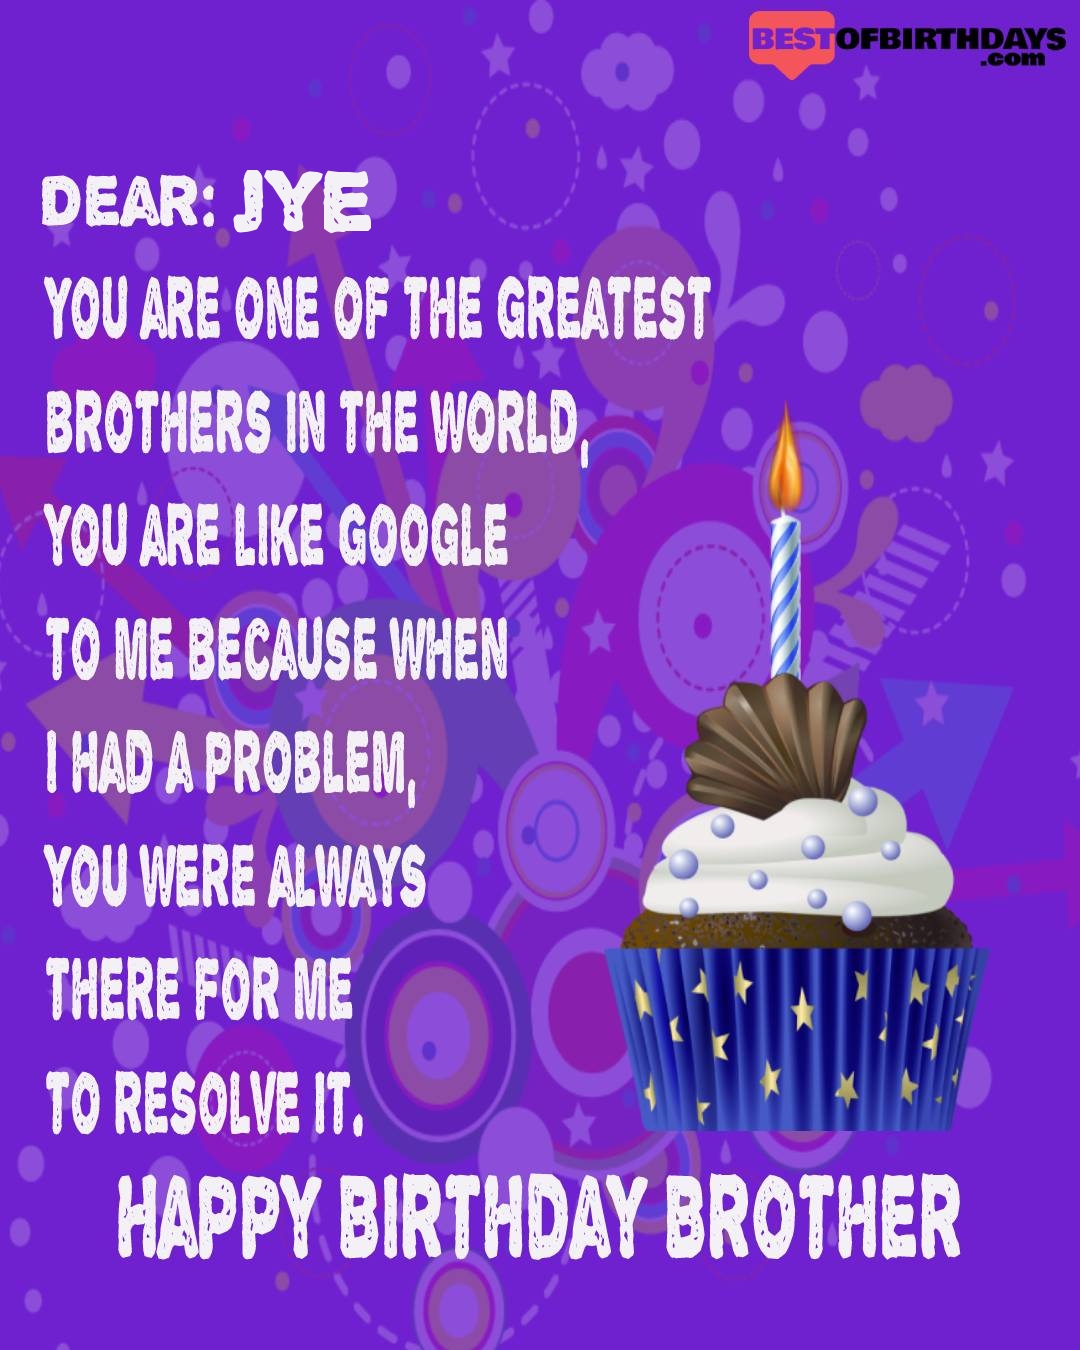 Happy birthday jye bhai brother bro